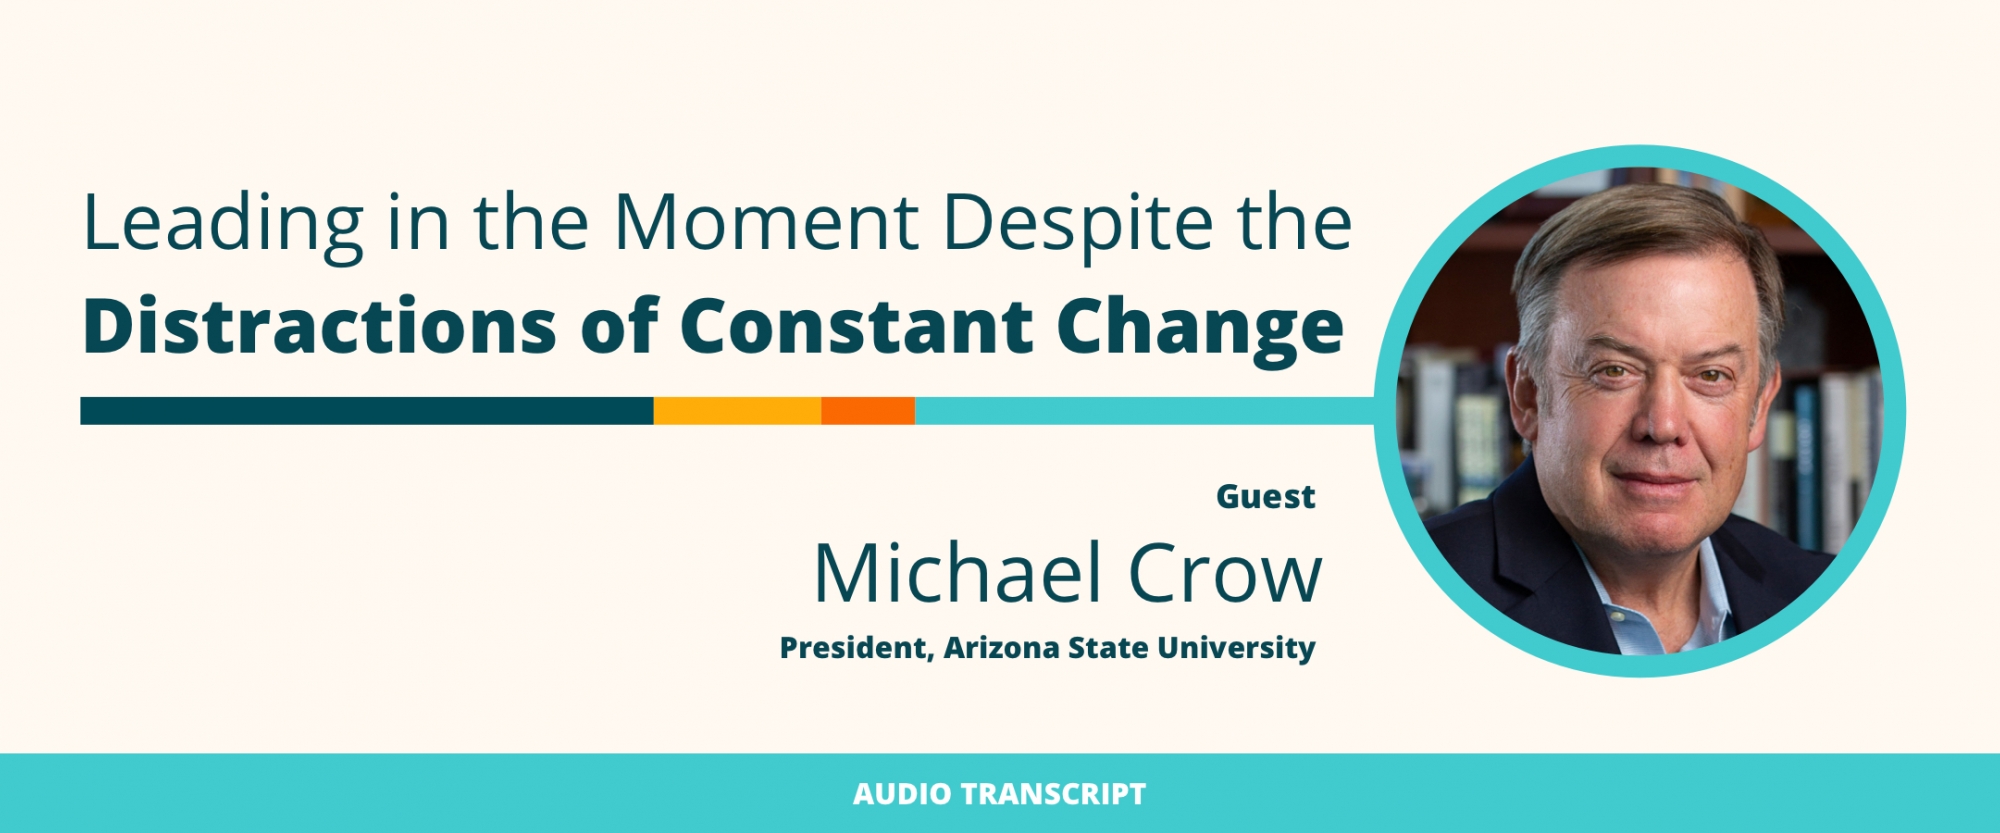 Weekly Wisdom Episode 1: Transcript of Conversation With Michael Crow, Arizona State University President